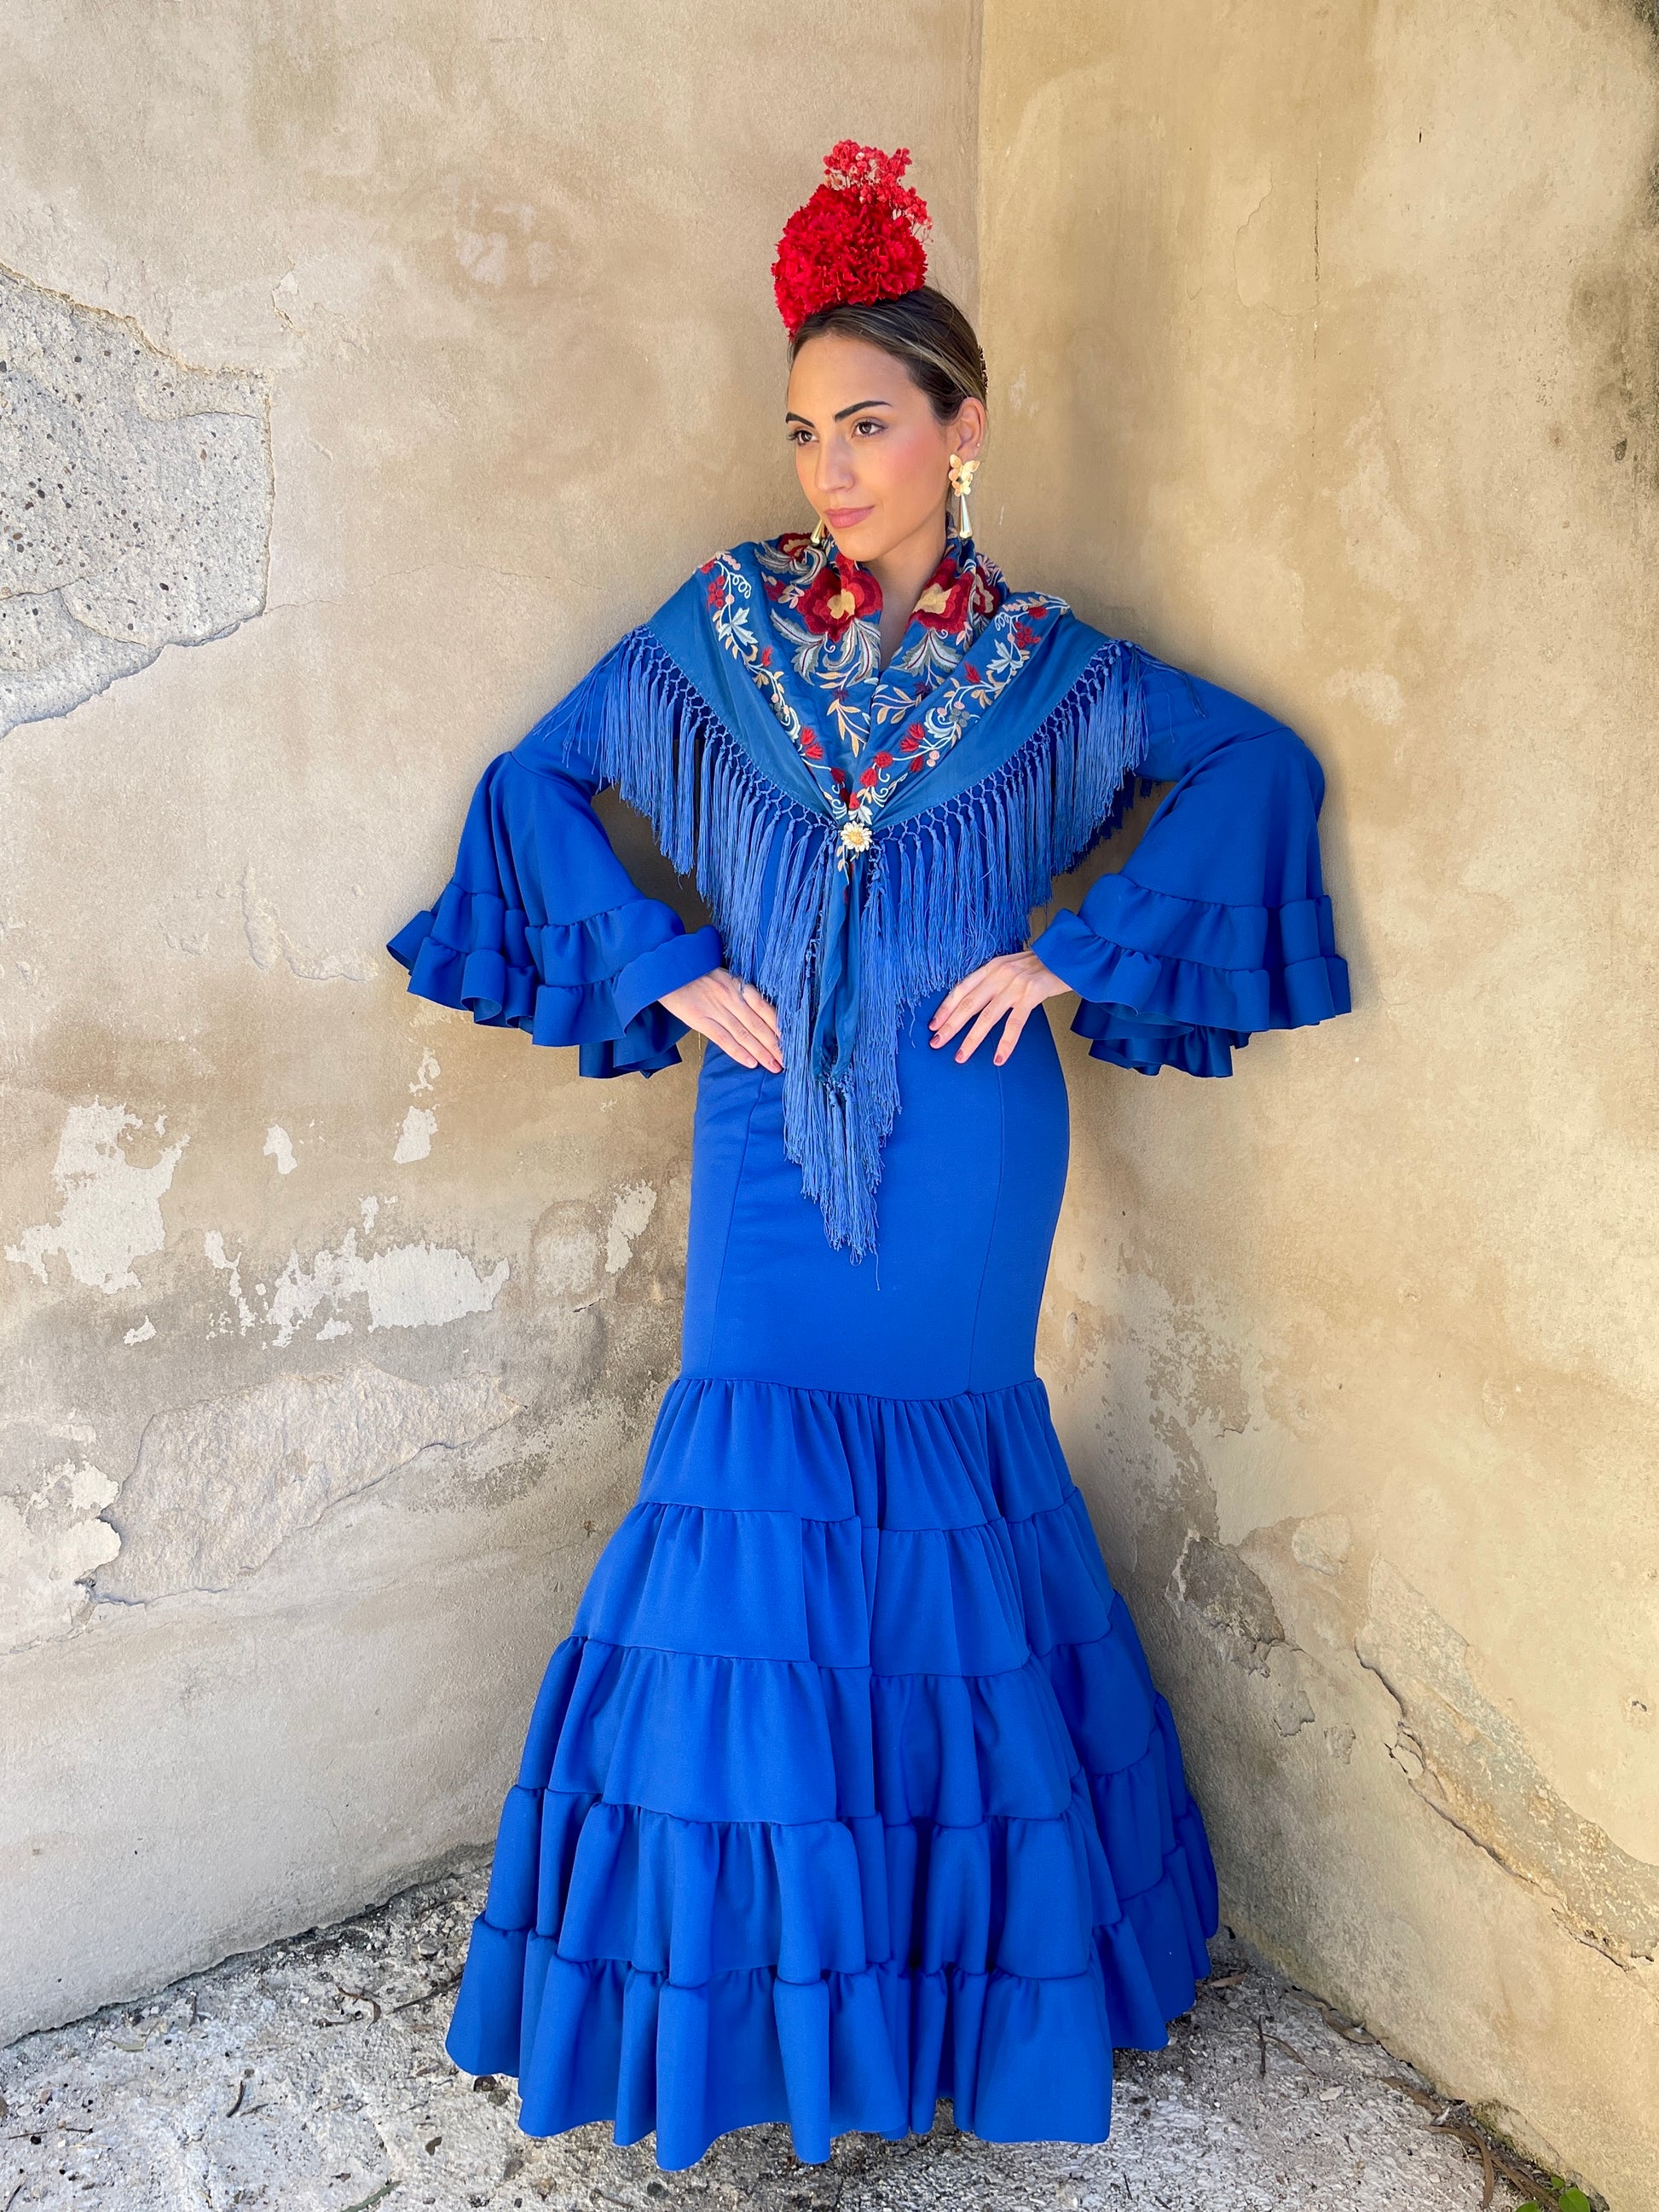 Disfraz de Flamenca